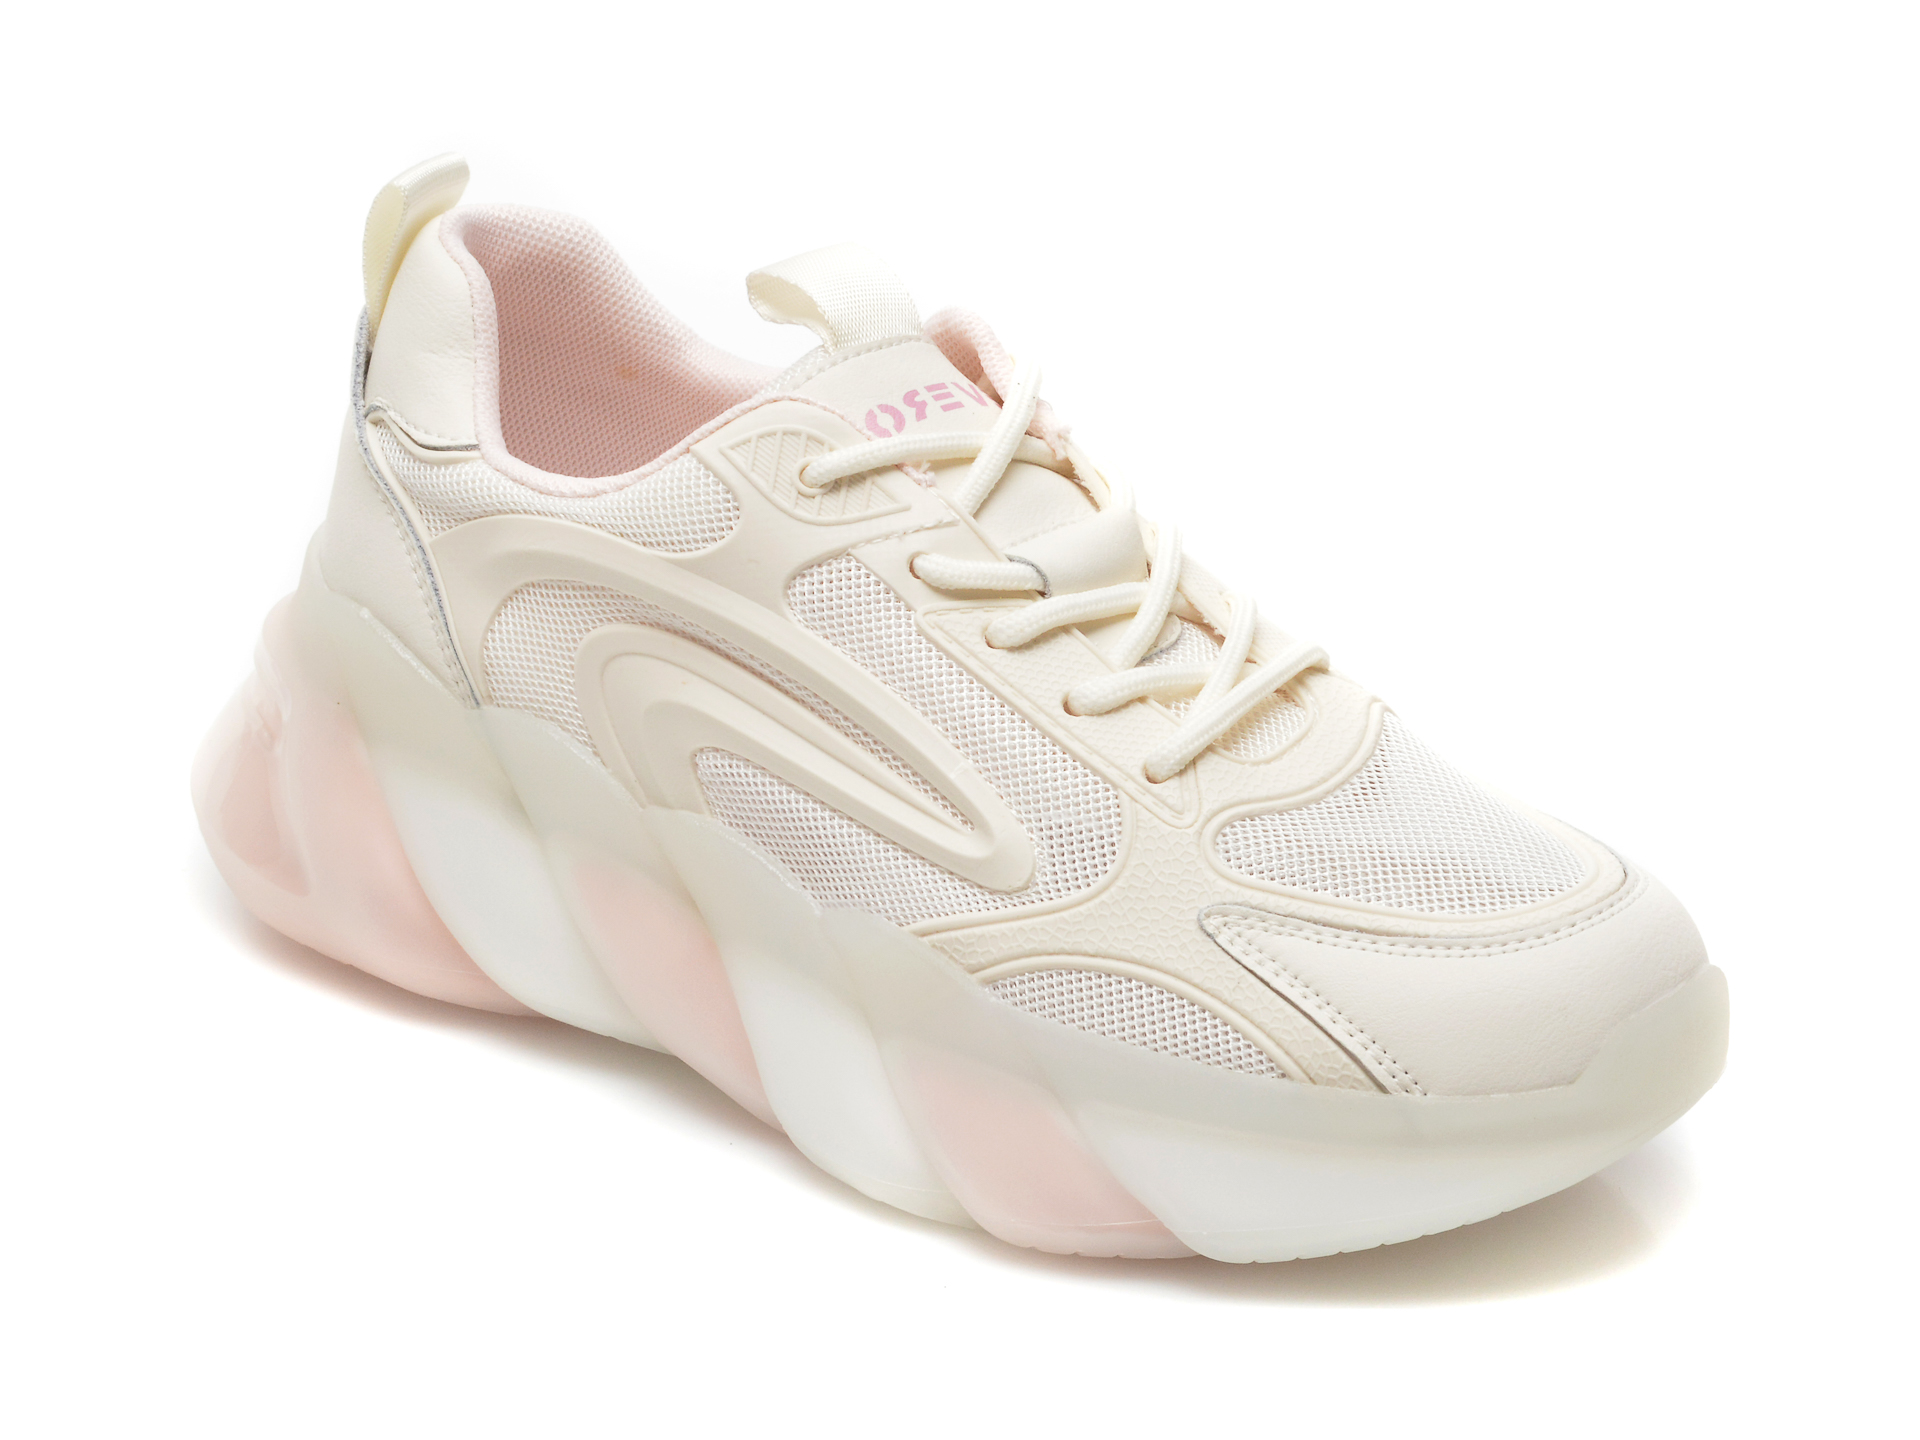 Pantofi sport FLAVIA PASSINI albi, A5229, din material textil si piele naturala Flavia Passini